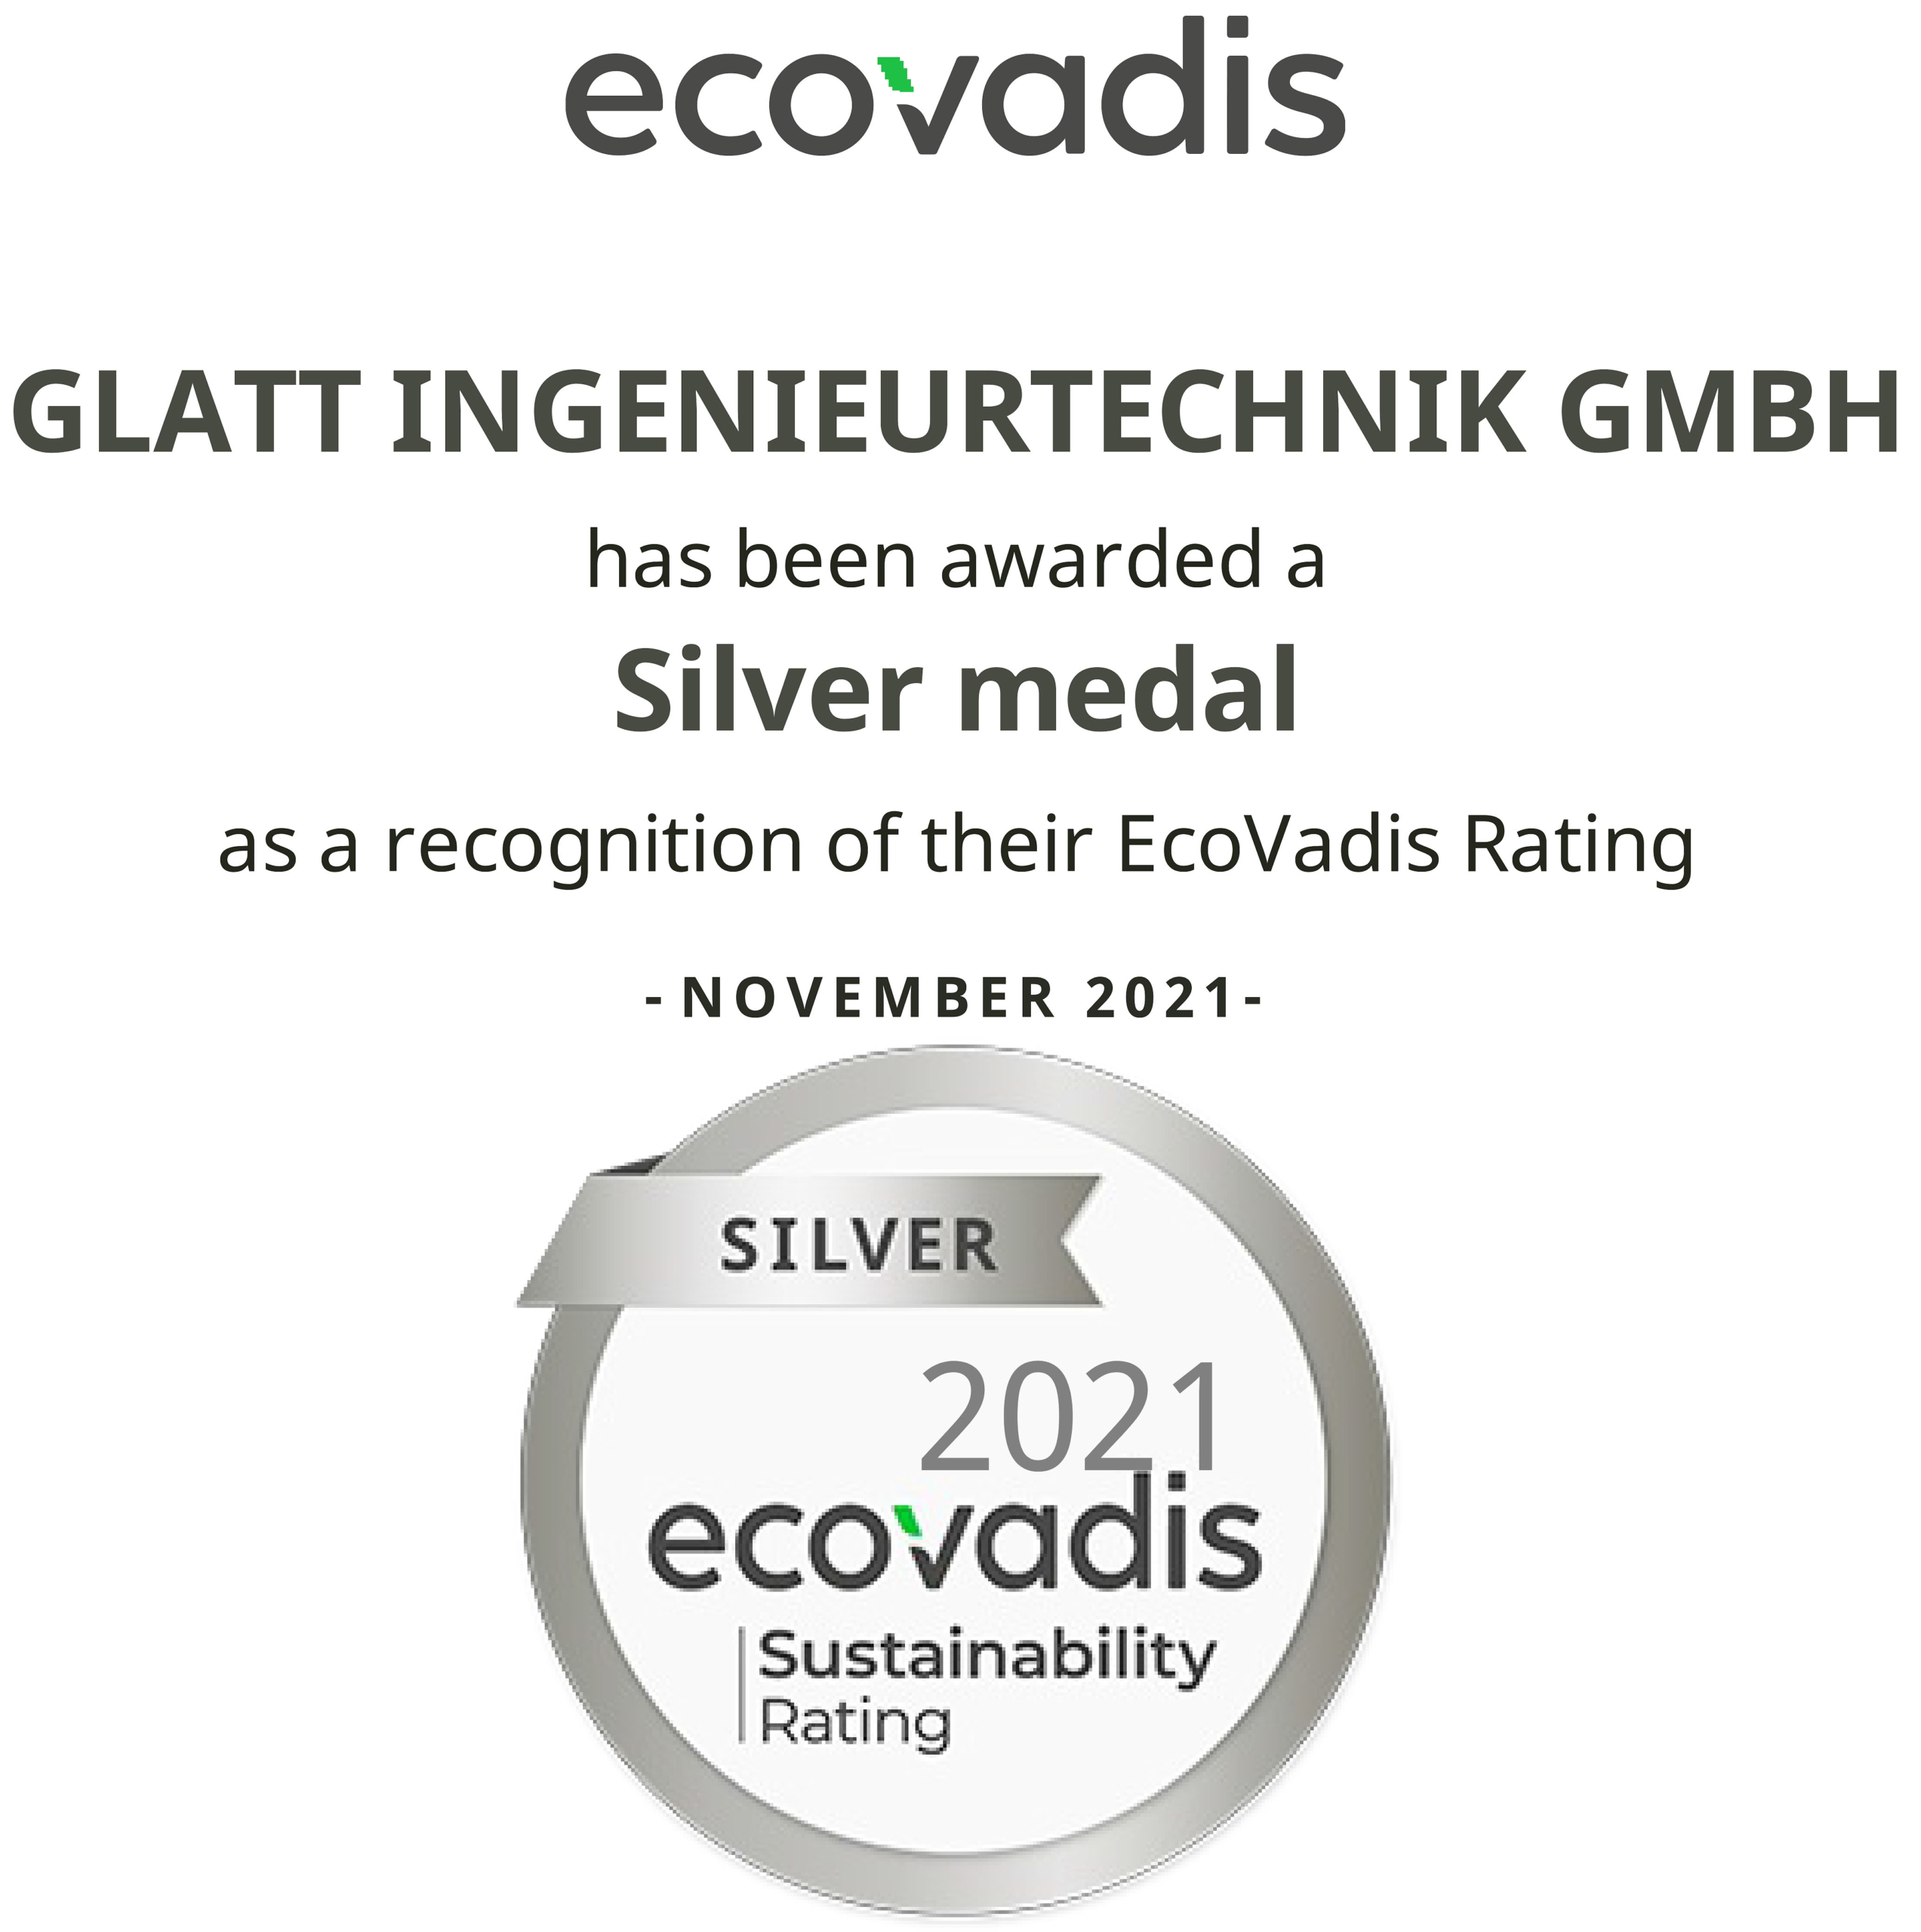 Silver medal in EcoVadis certification for sustainable actions of Glatt Ingenieurtechnik